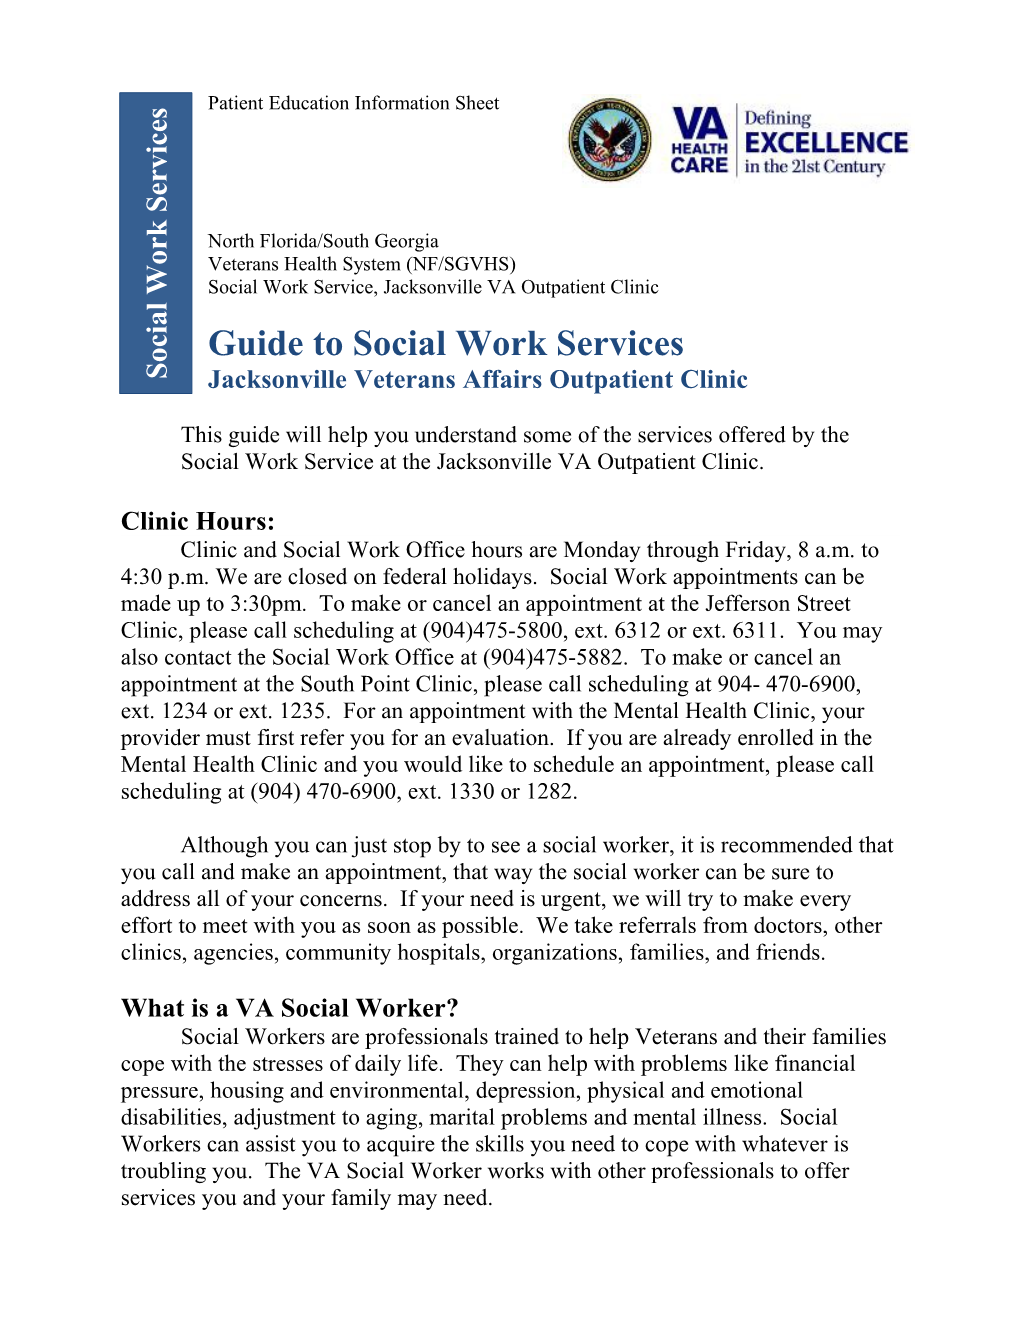 Social Work Services Guide Jax